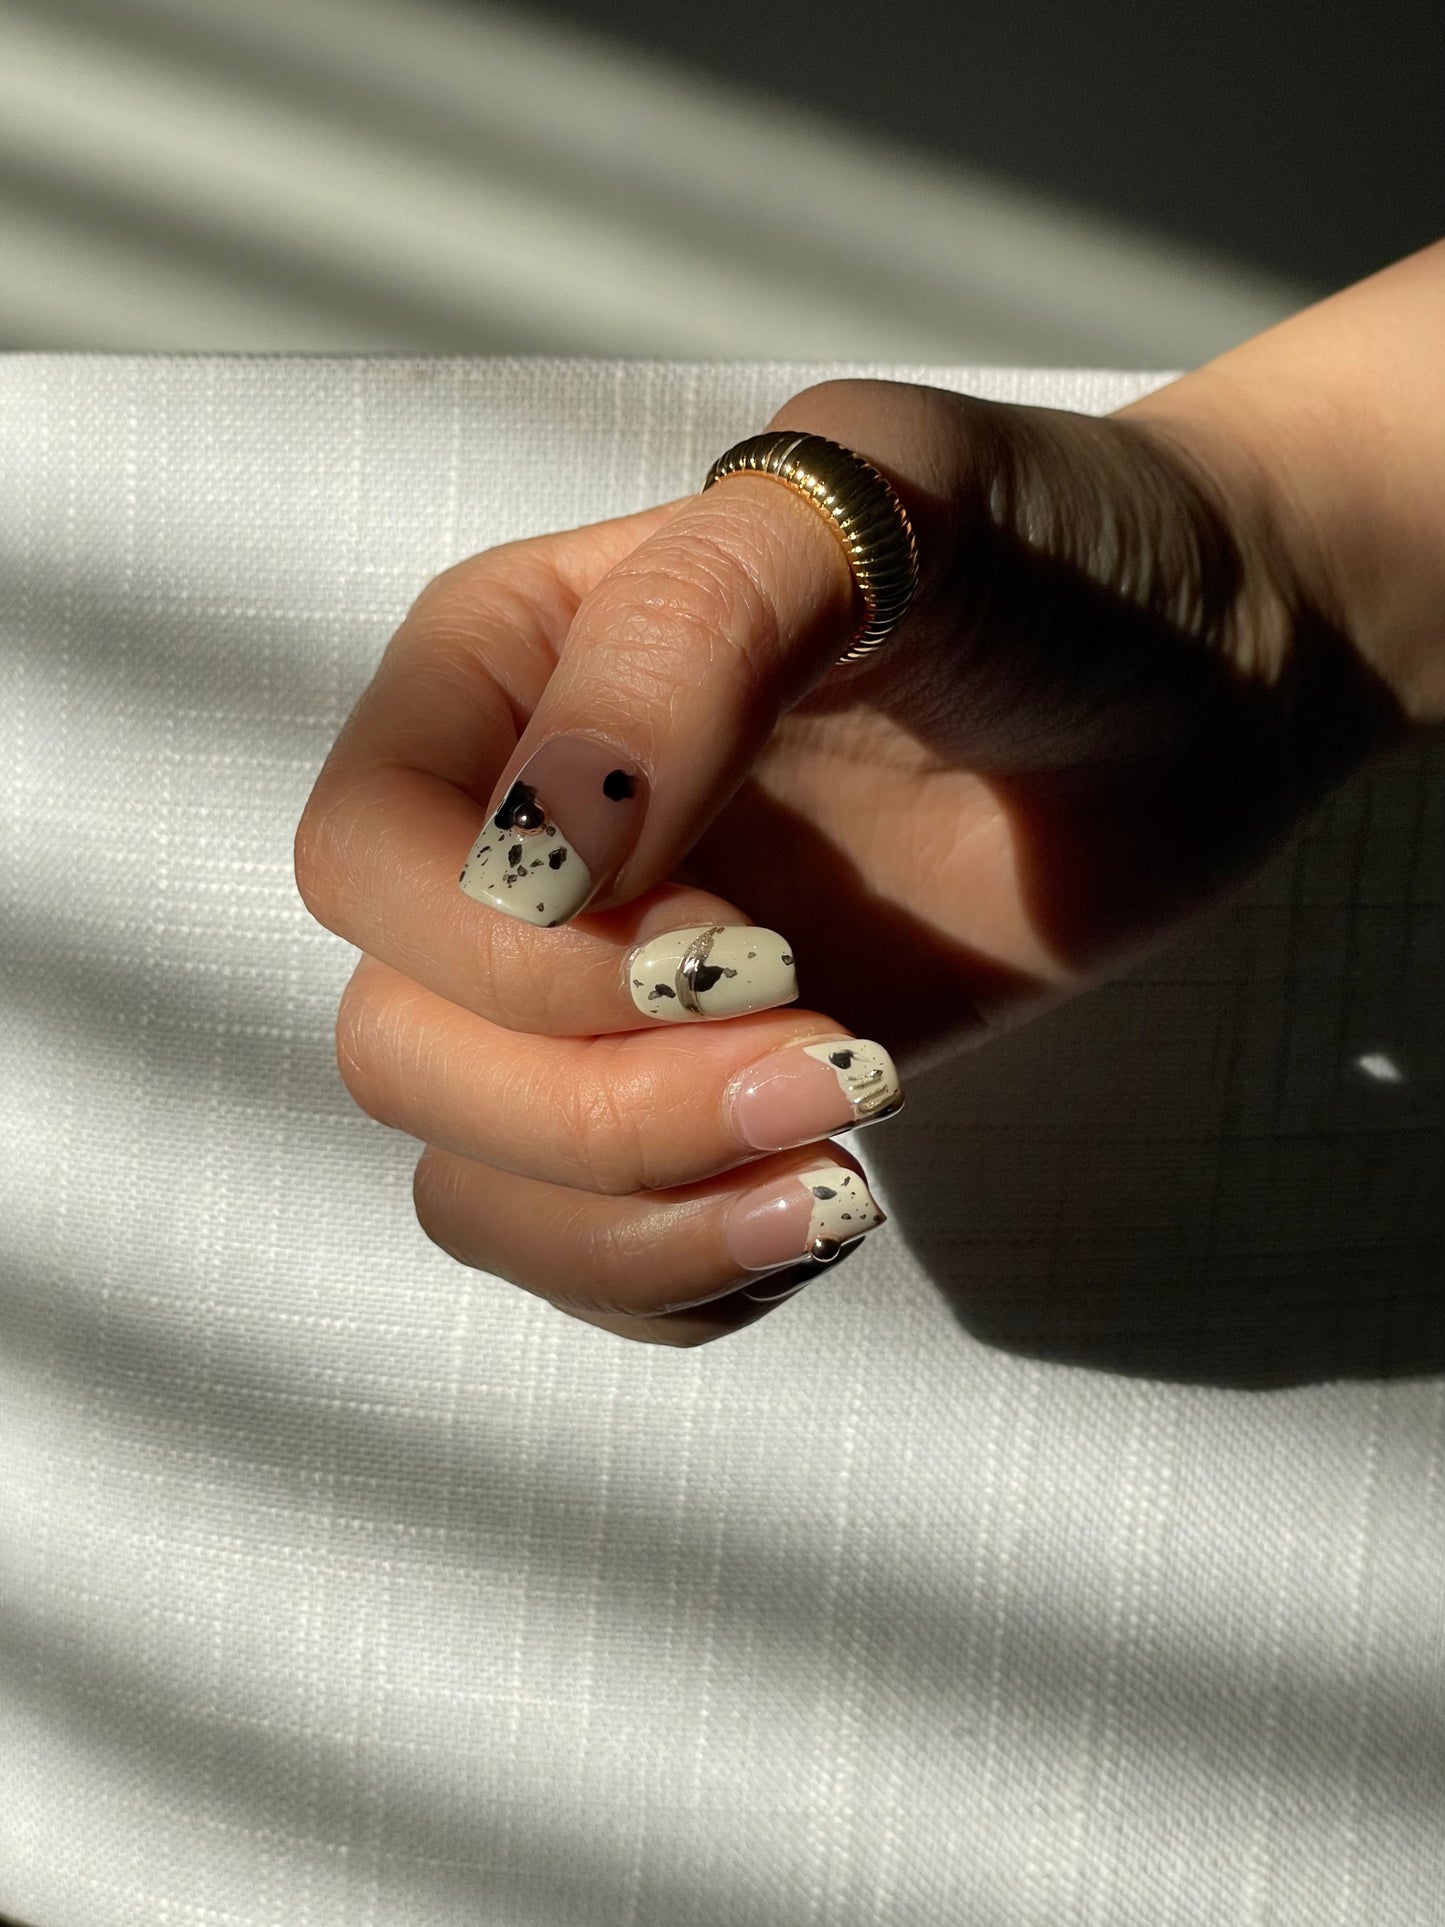 Press On Nails|MarbleArt|Semi-Transparent Short Squoval Nails, Reusable | 5 Sizes - 10 Nail Kit